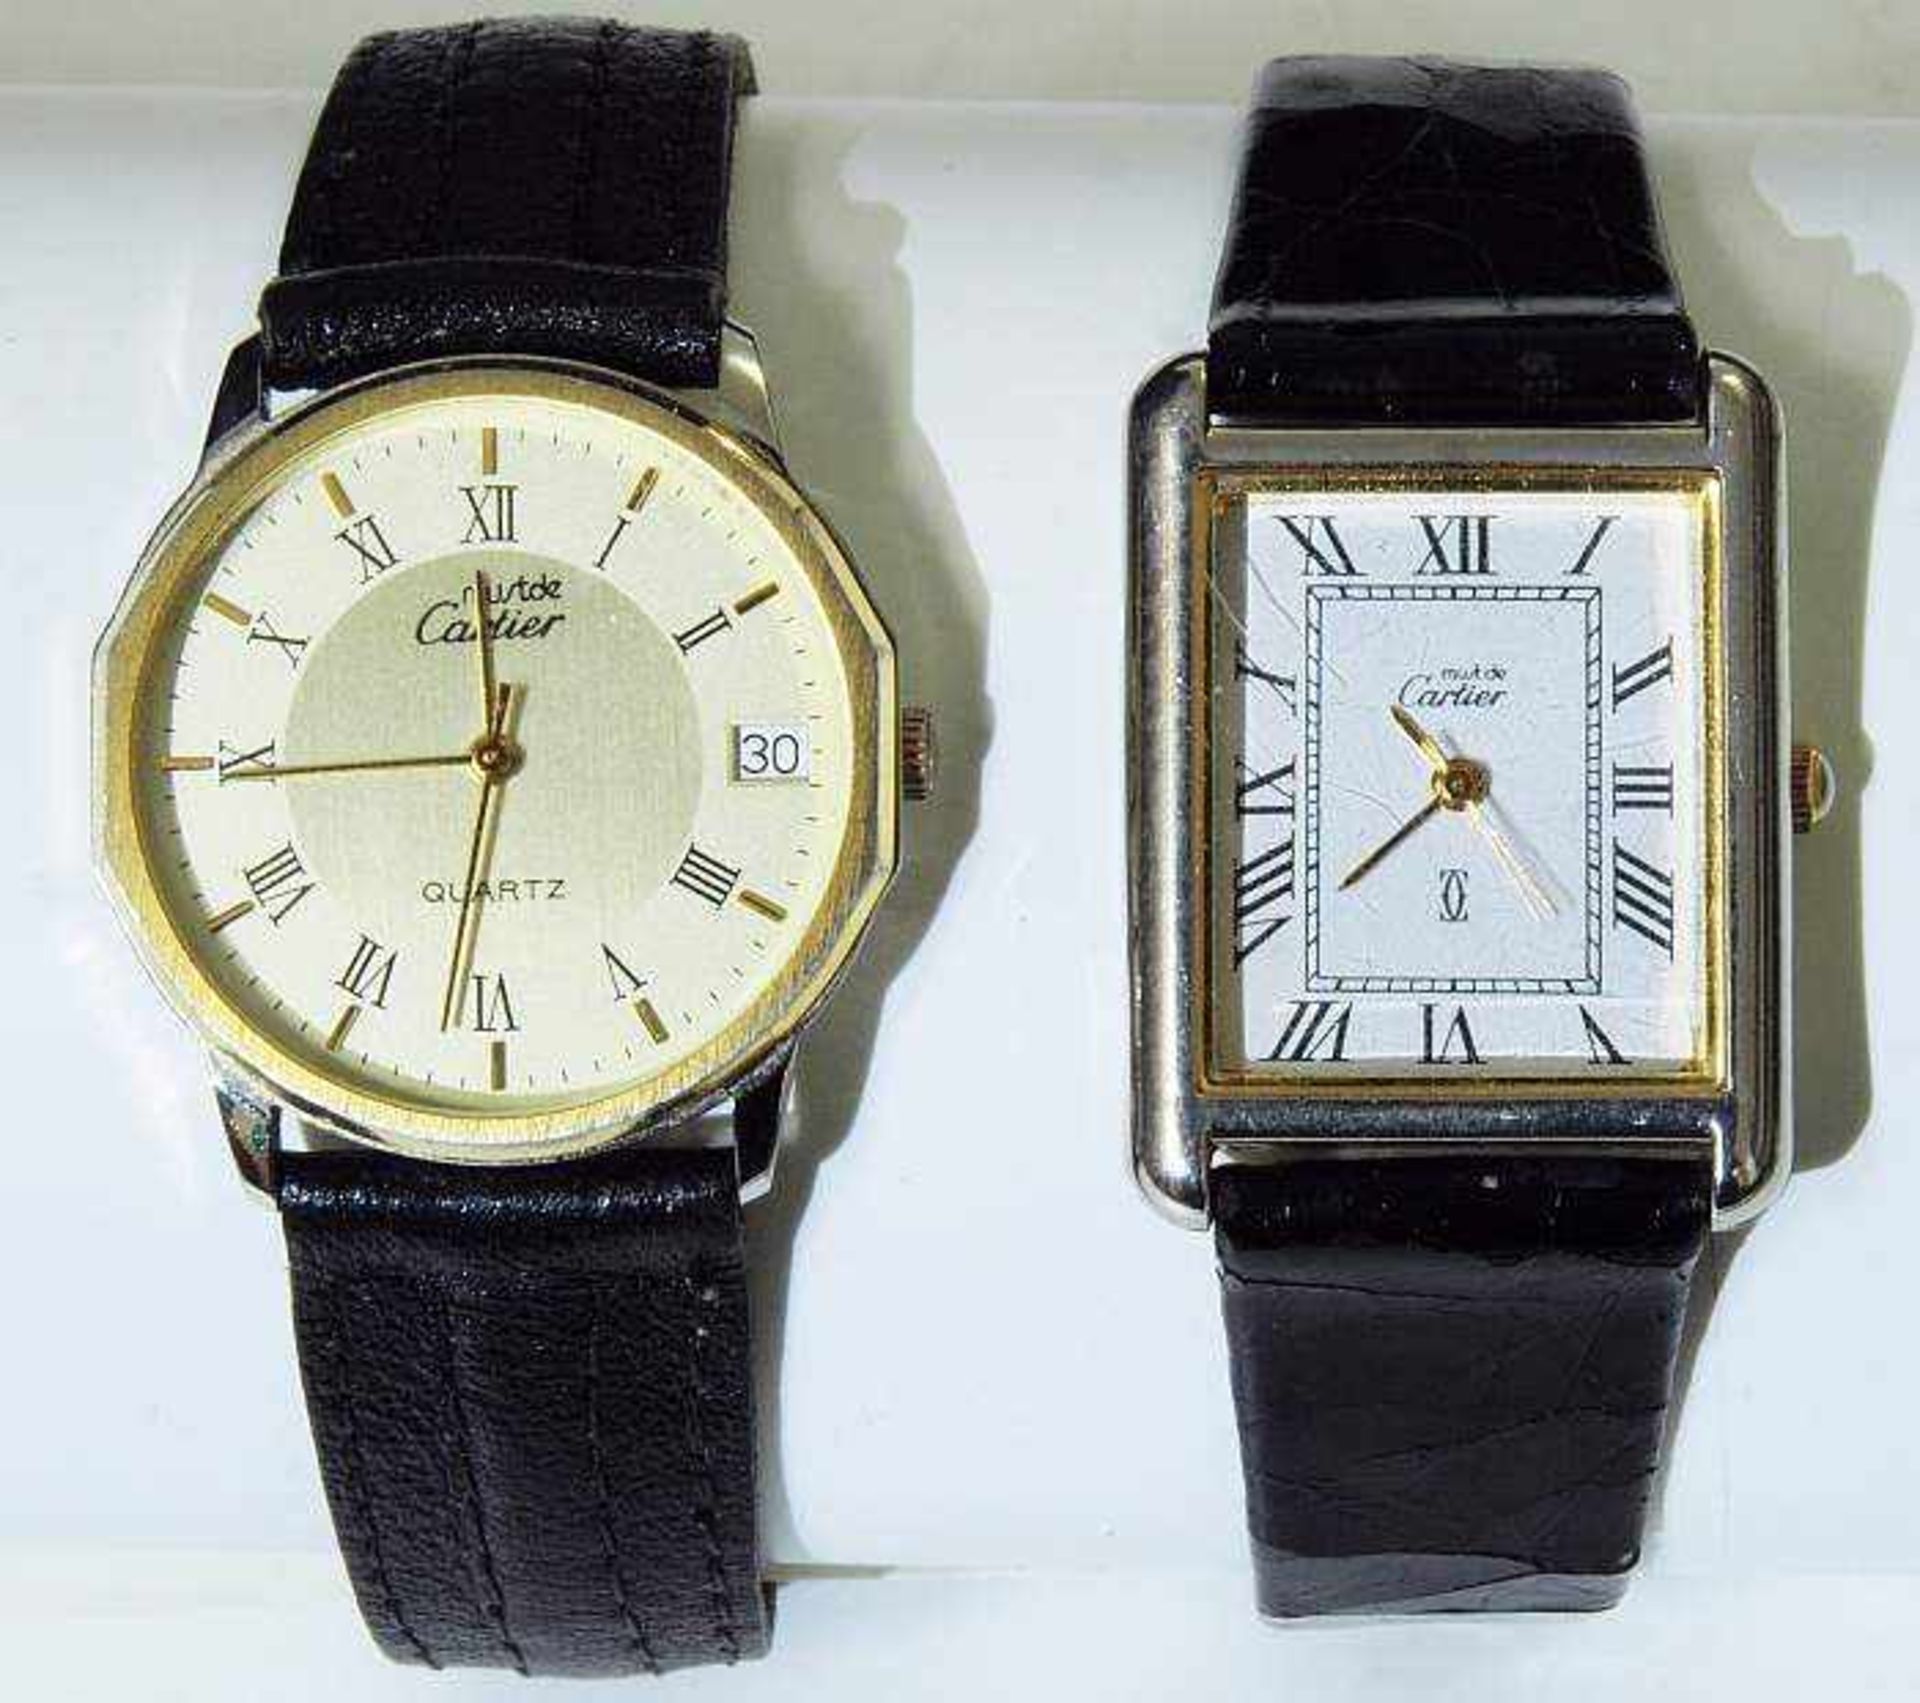 Zwei CARTIER Armbanduhren.Zwei CARTIER Armbanduhren. 1) Armbanduhr mit rechteckigem Stahlgehäuse